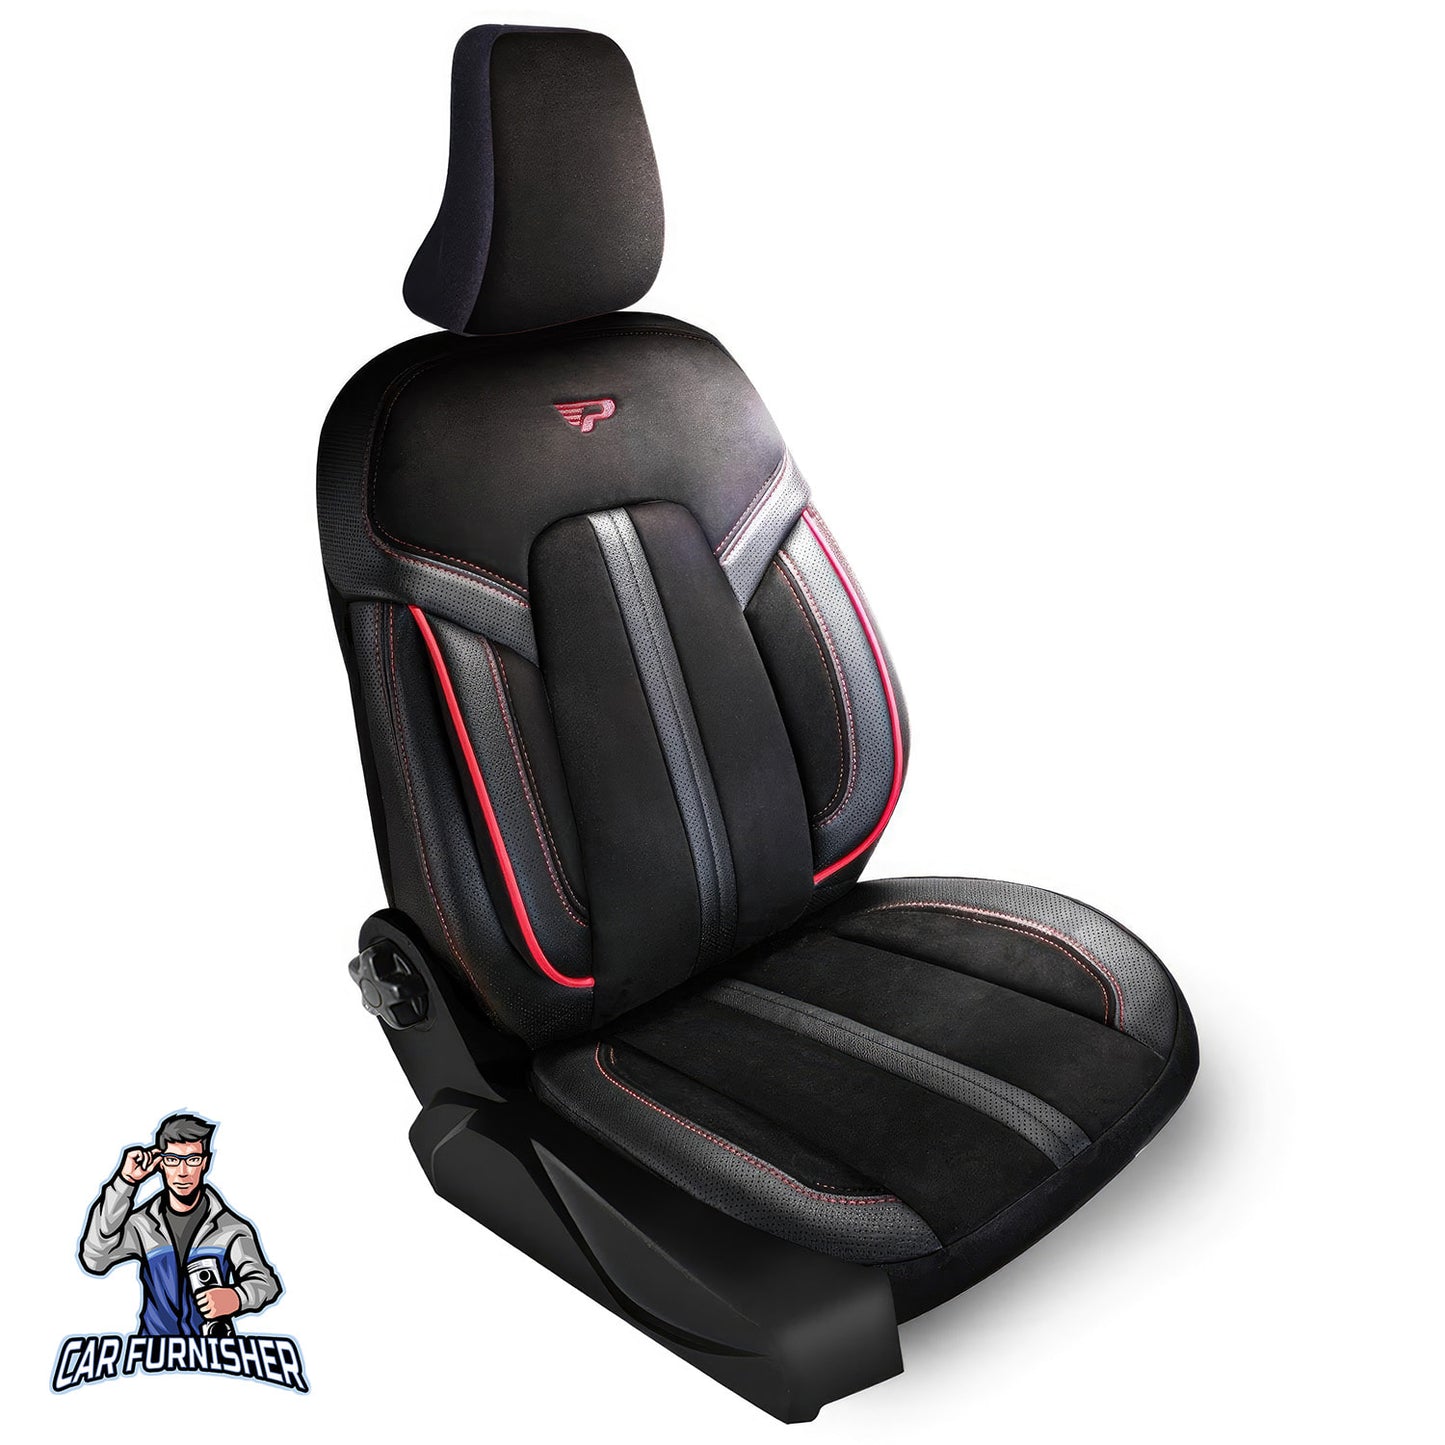 Car Seat Cover Set - Lisbon Design Dark Red 5 Seats + Headrests (Full Set) Leather & Velour Fabric